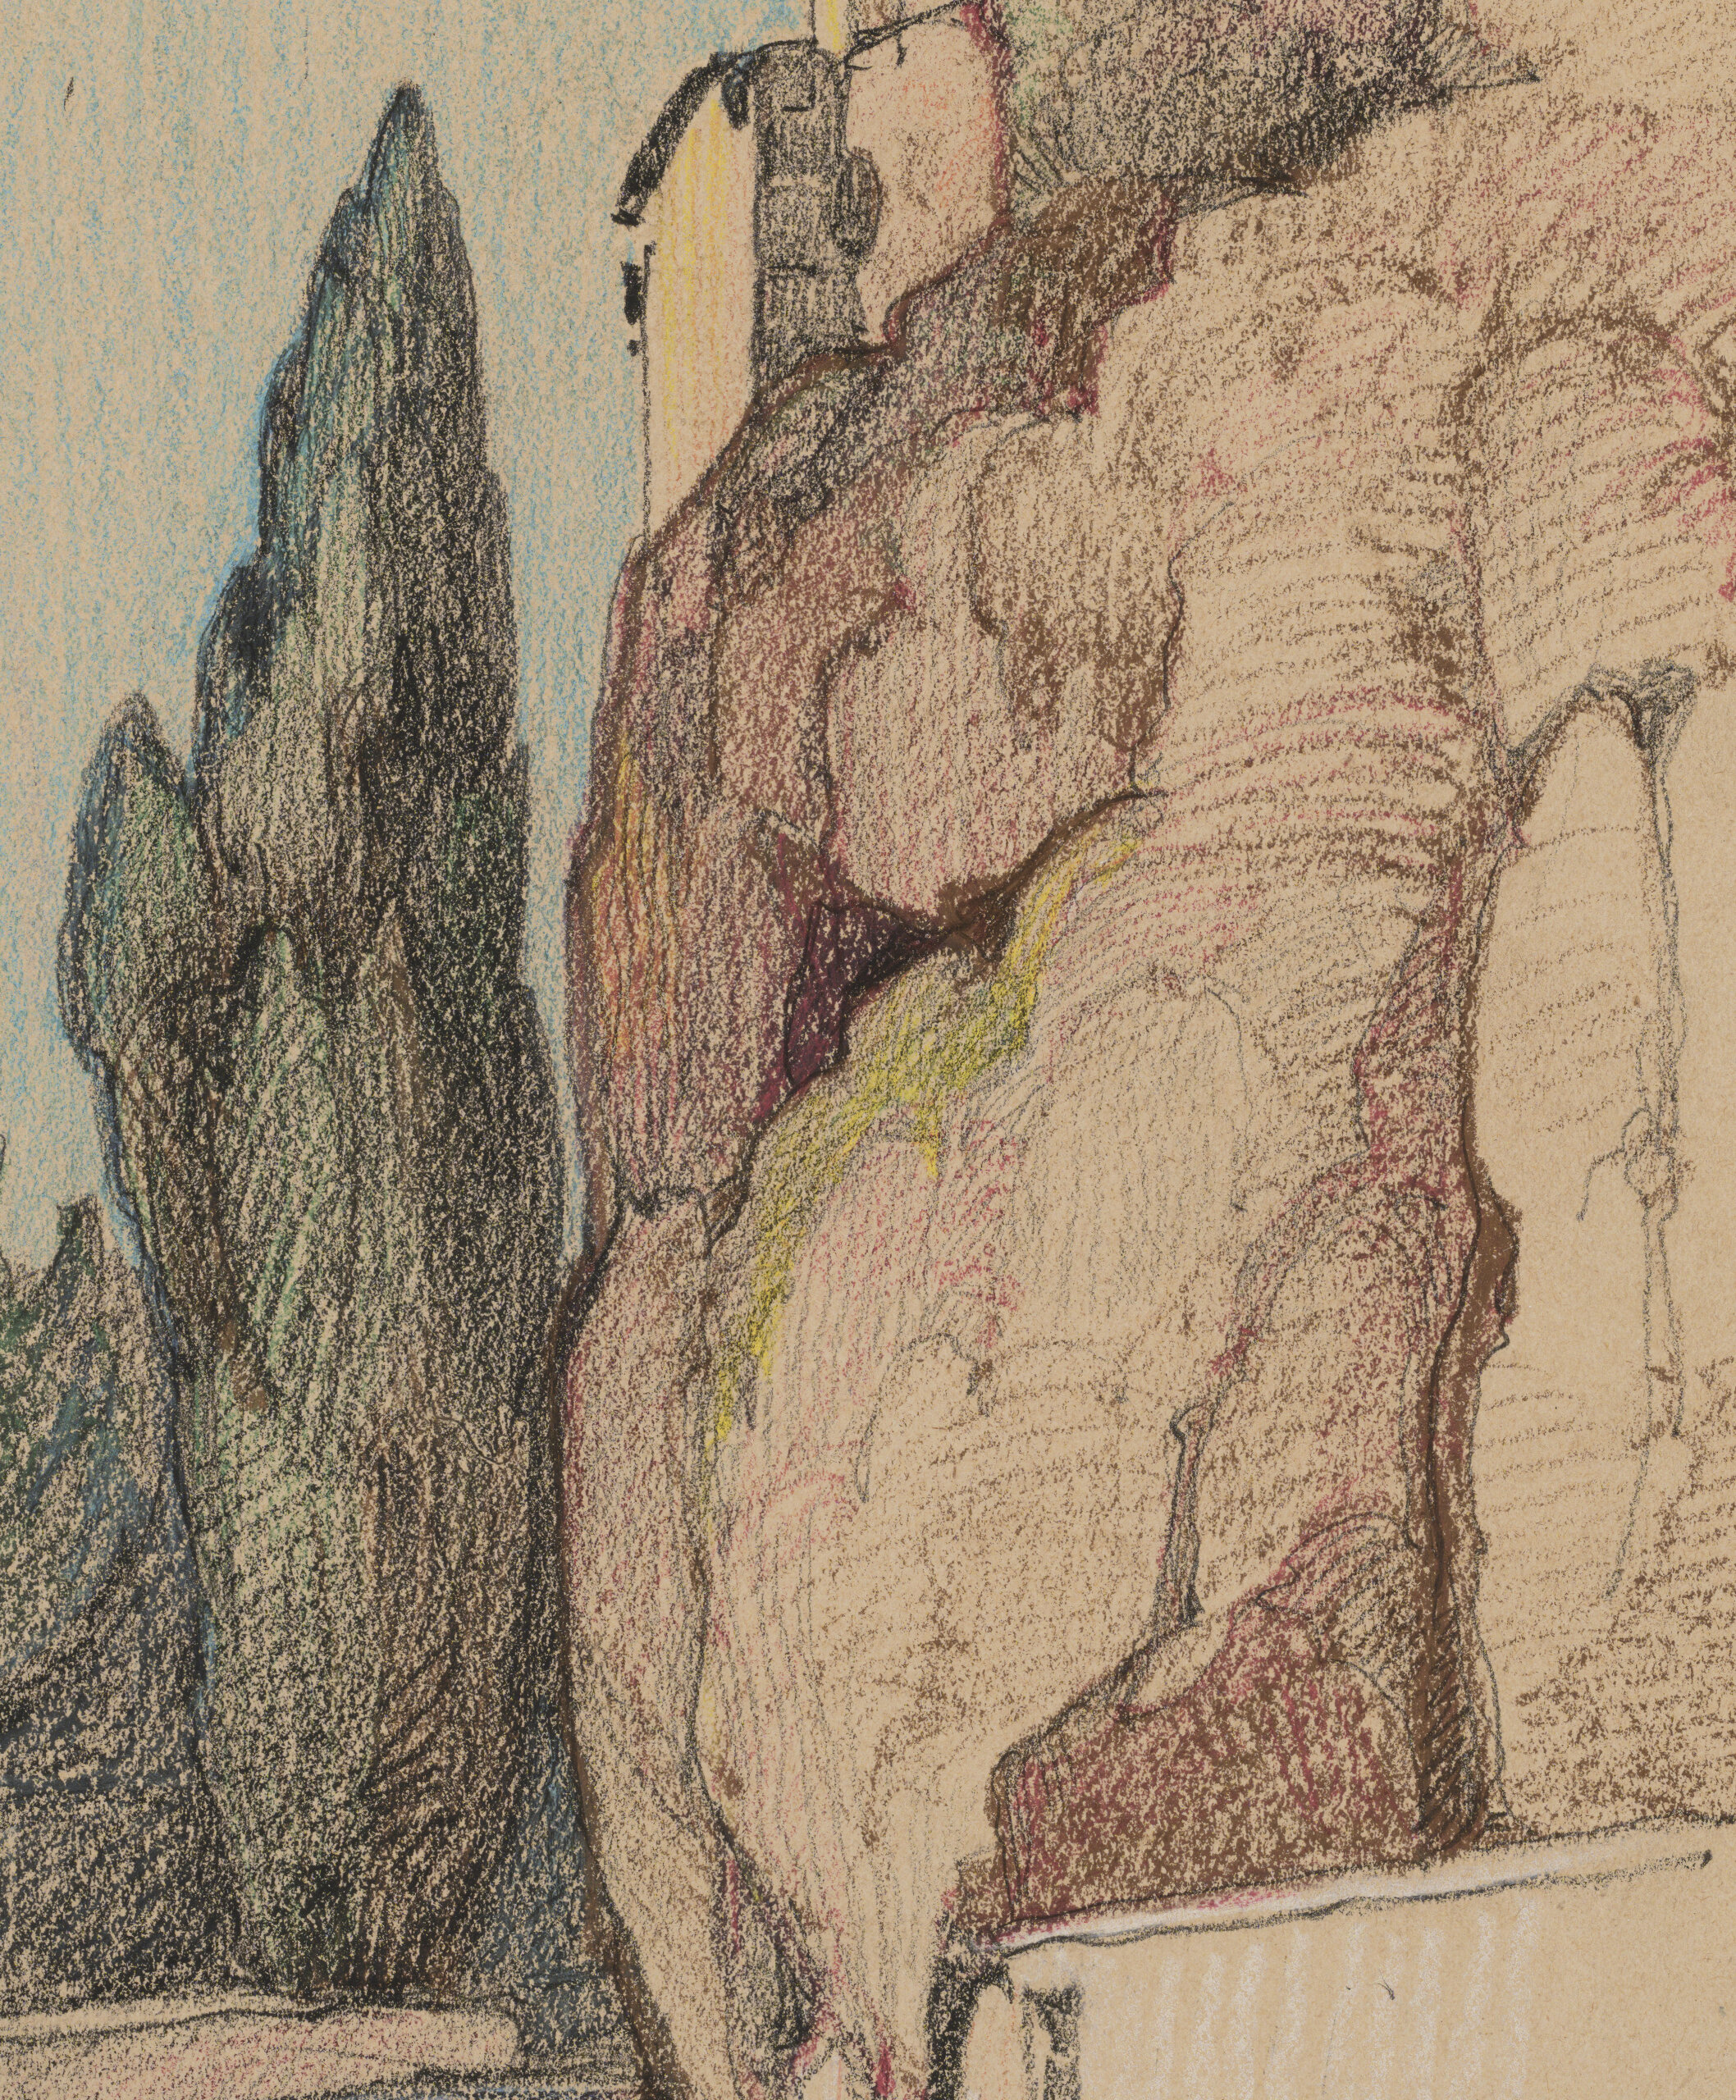 Roman Nyman “Cuenca”, 1923. 31 x 22,5 cm